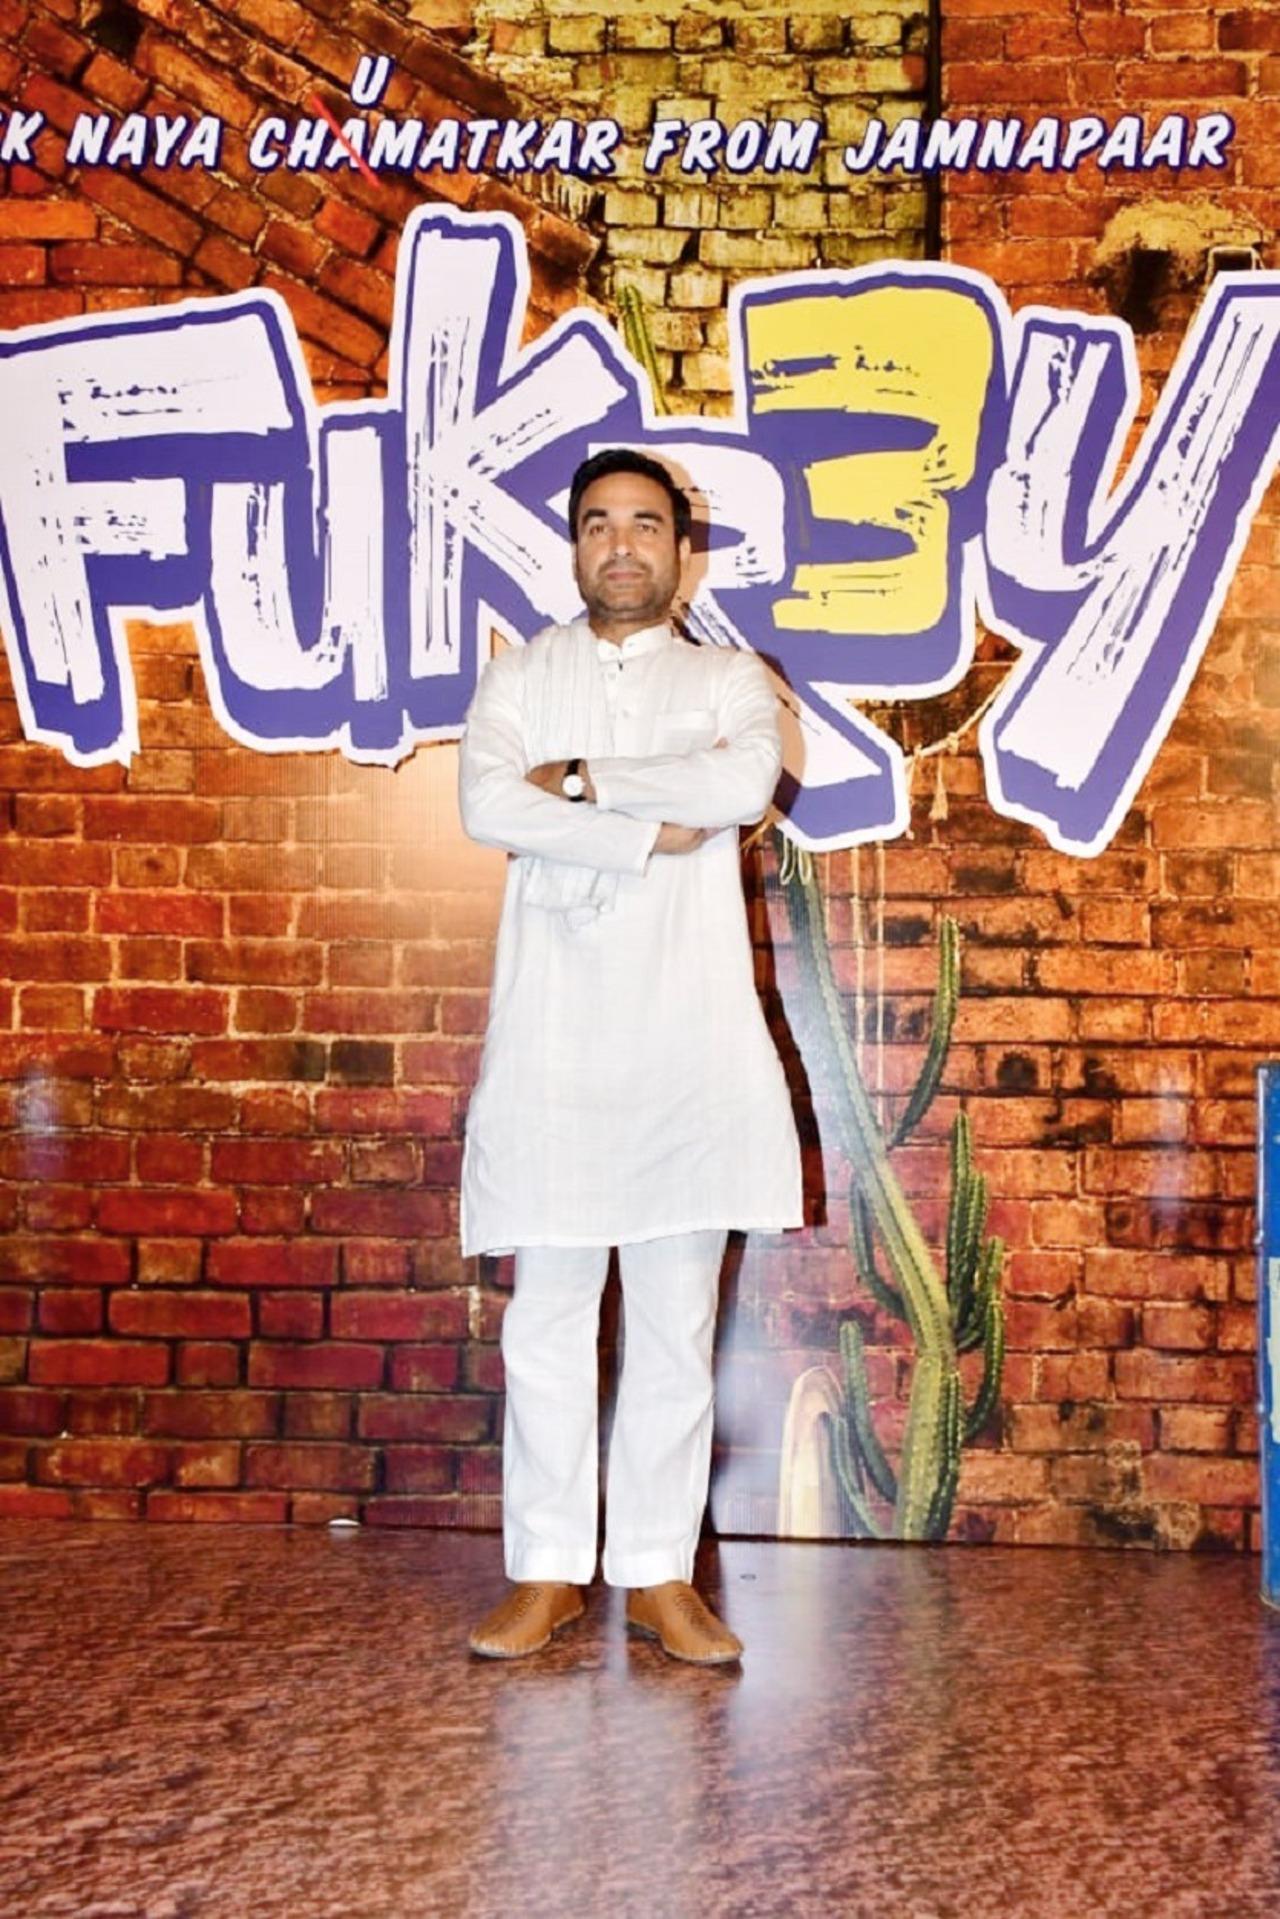 Birthday boy Pankaj Tripathi wore a white kurta pyjama for the occasion